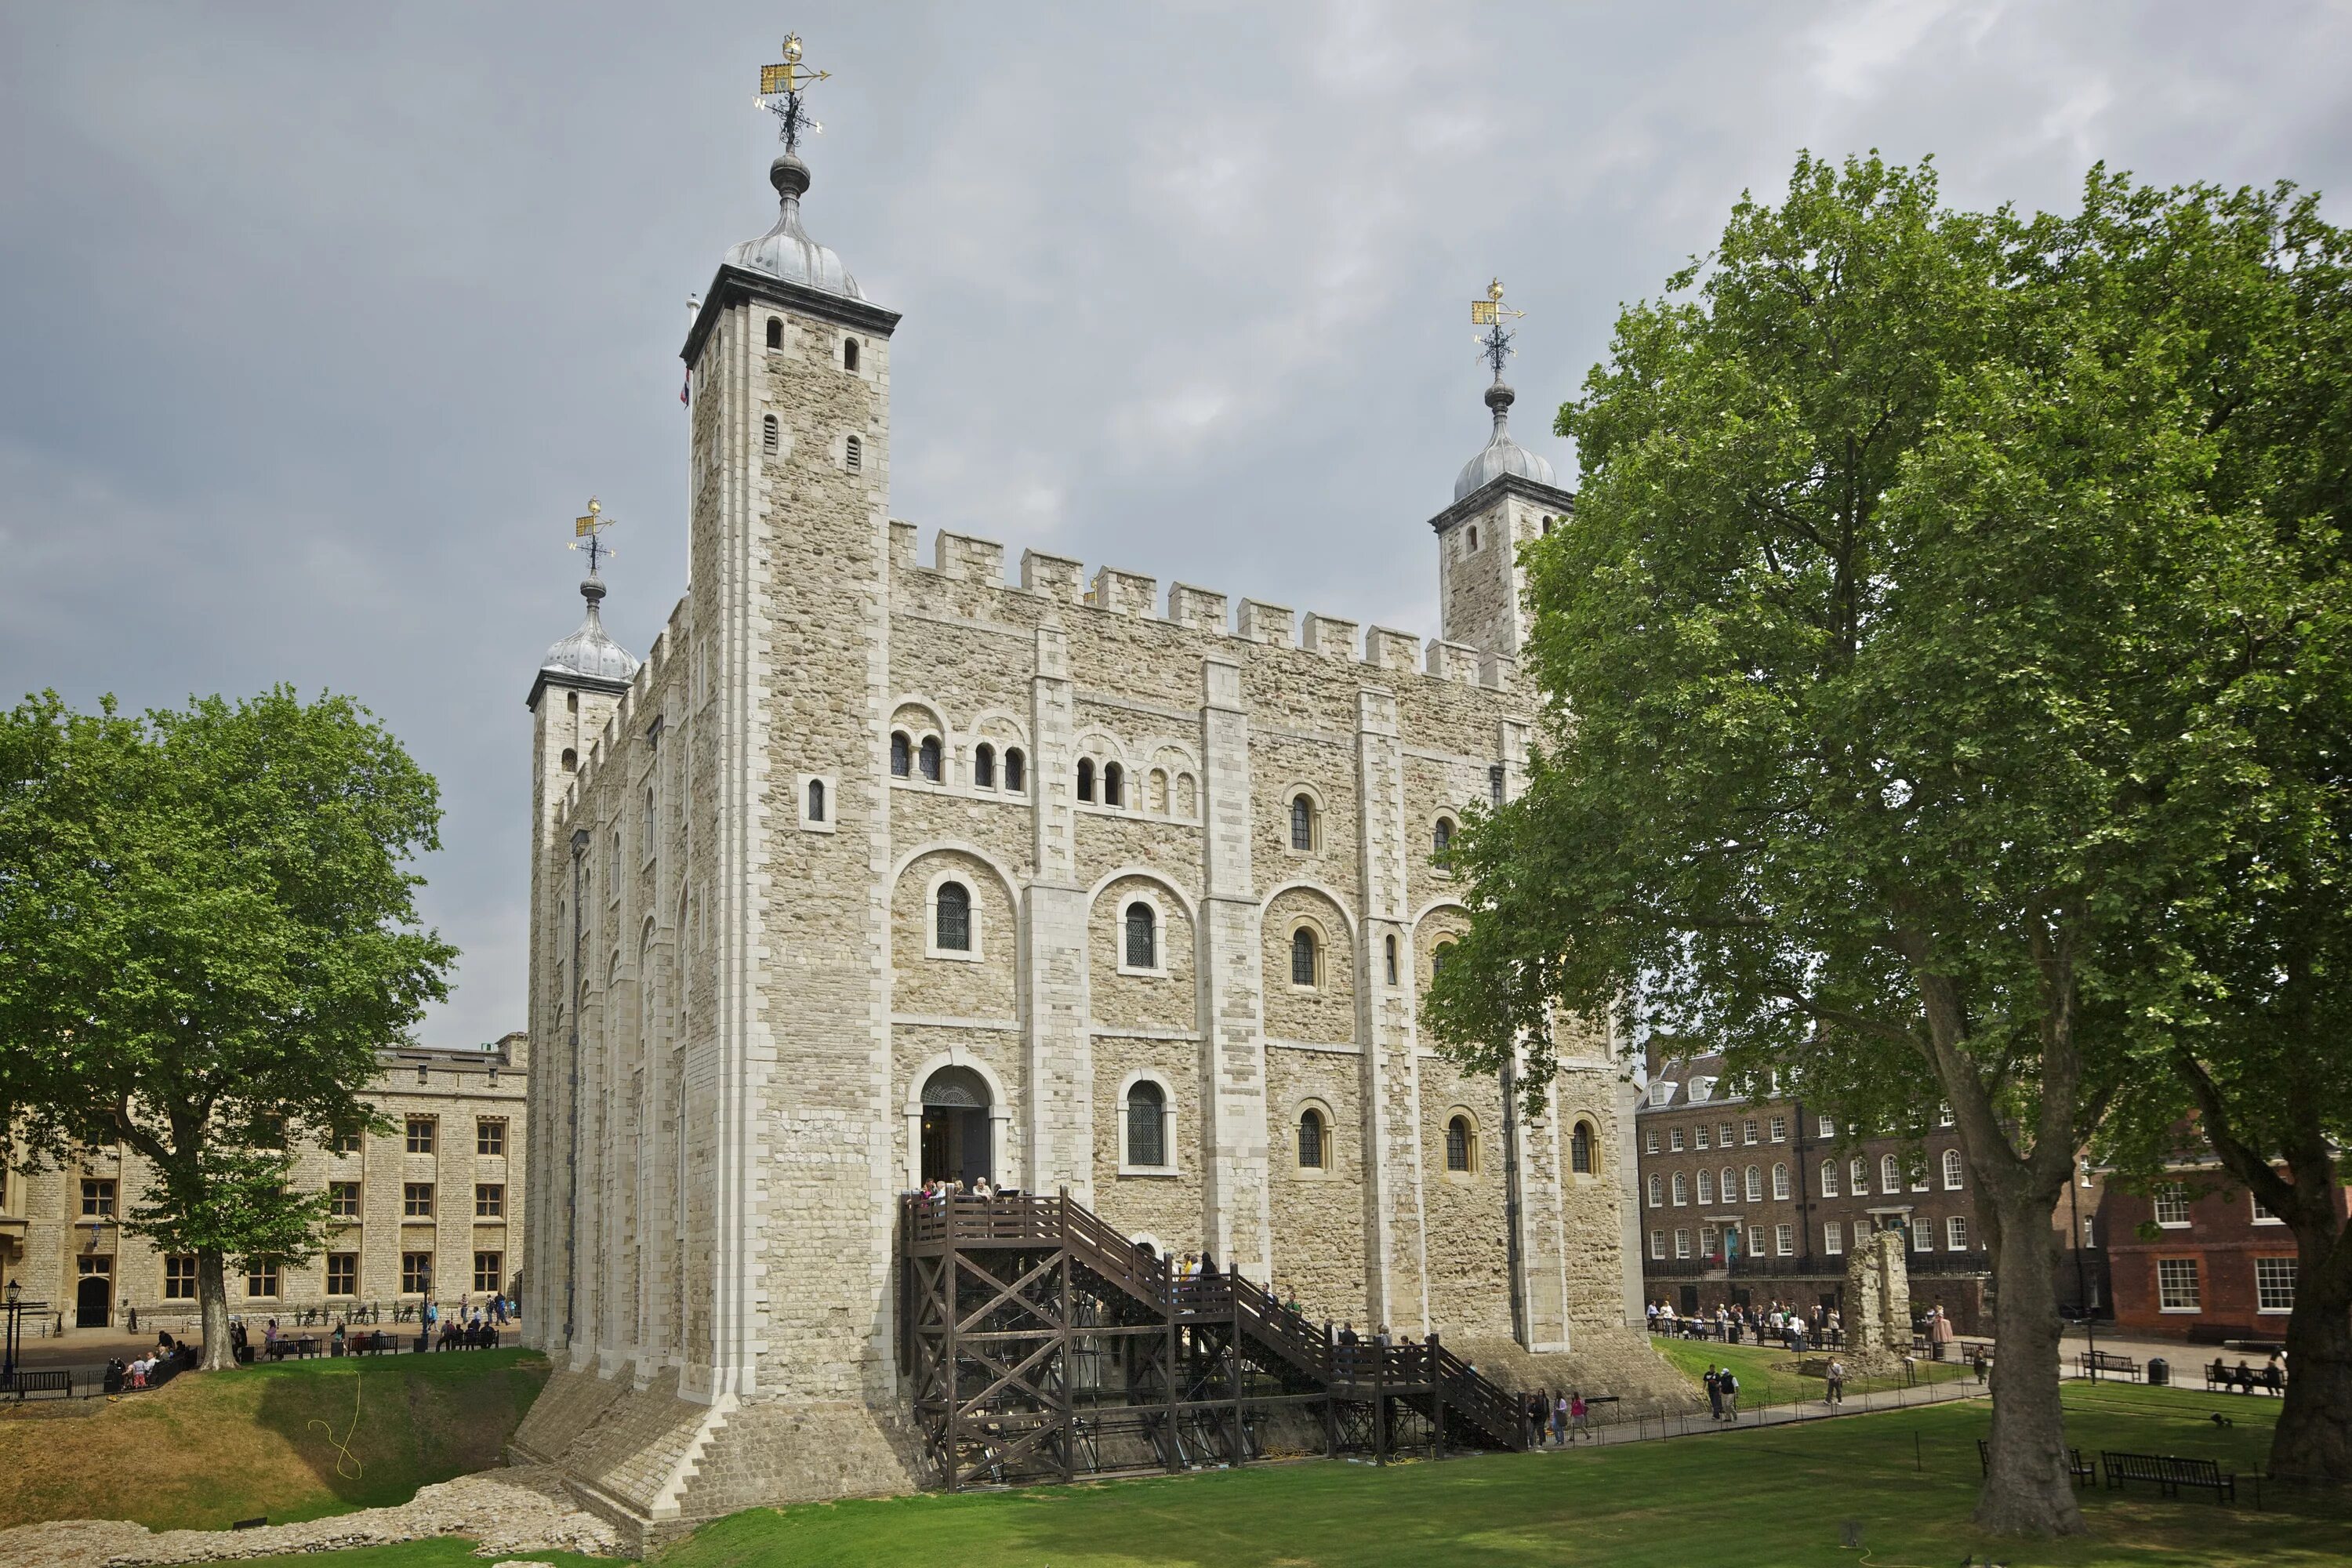 Тауэр белая башня Лондон. Донжон Тауэра белая башня. Замок Вильгельма завоевателя - Тауэр (Лондон). Белая башня в лондонском Тауэре. Лондон white